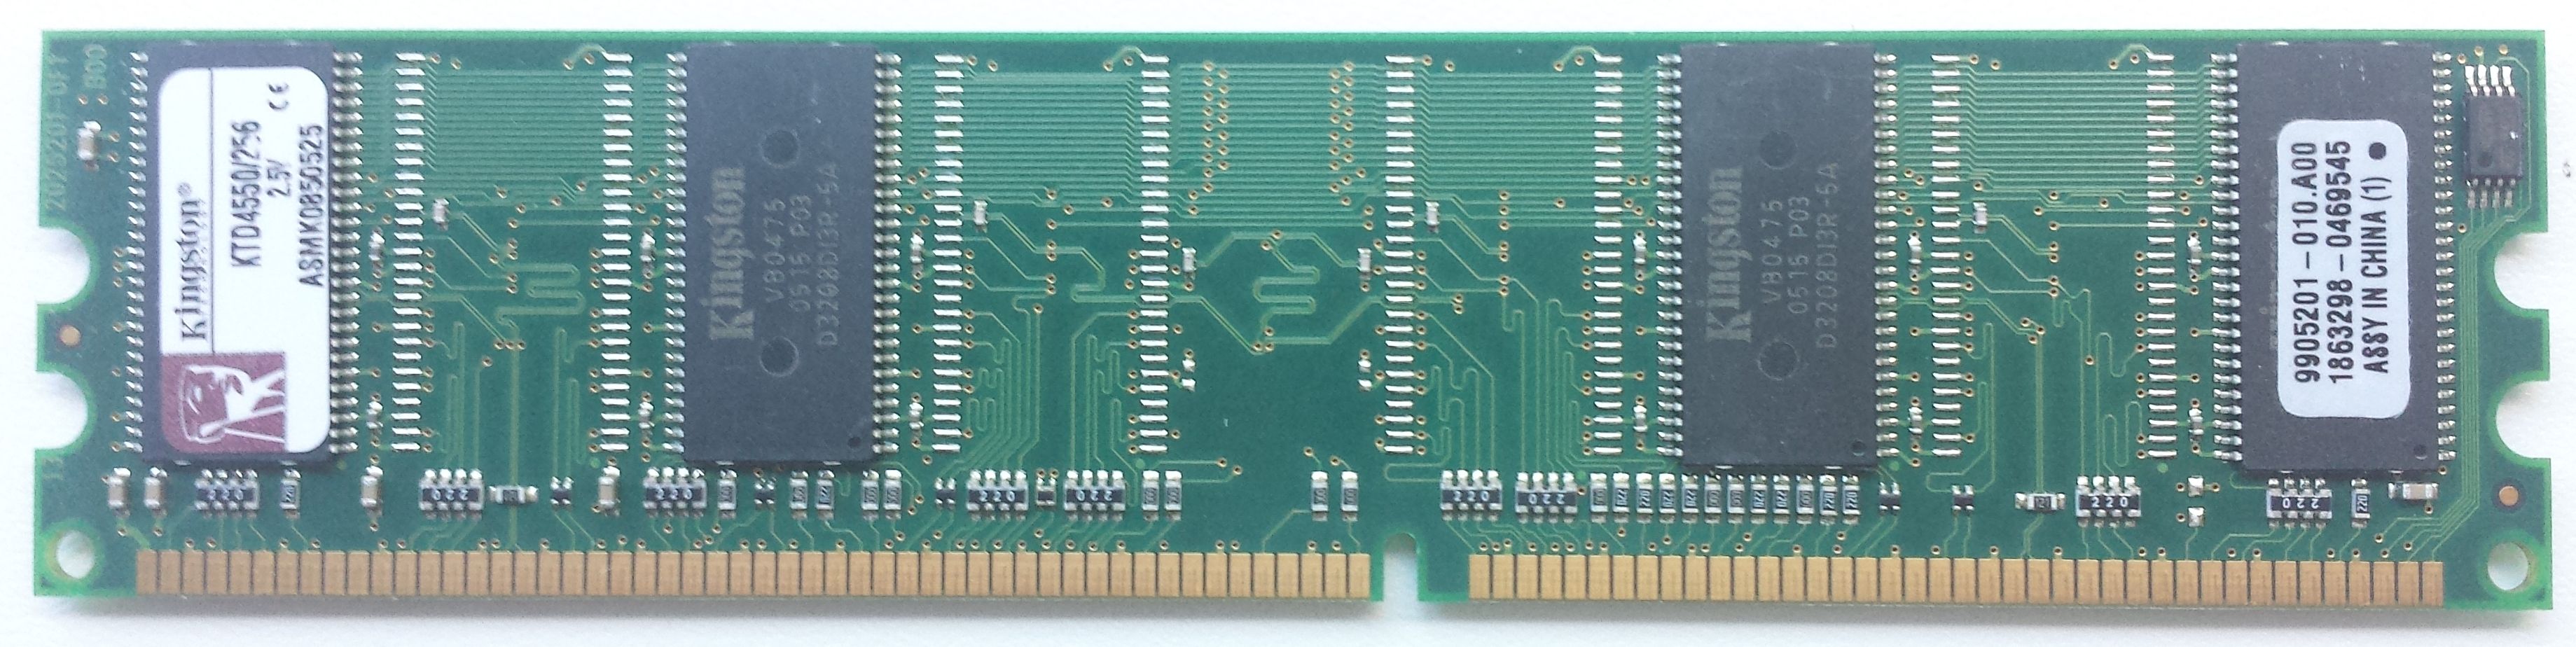 DDR 256MB 333Mhz-PC2700 / Kingston KTD4550/256